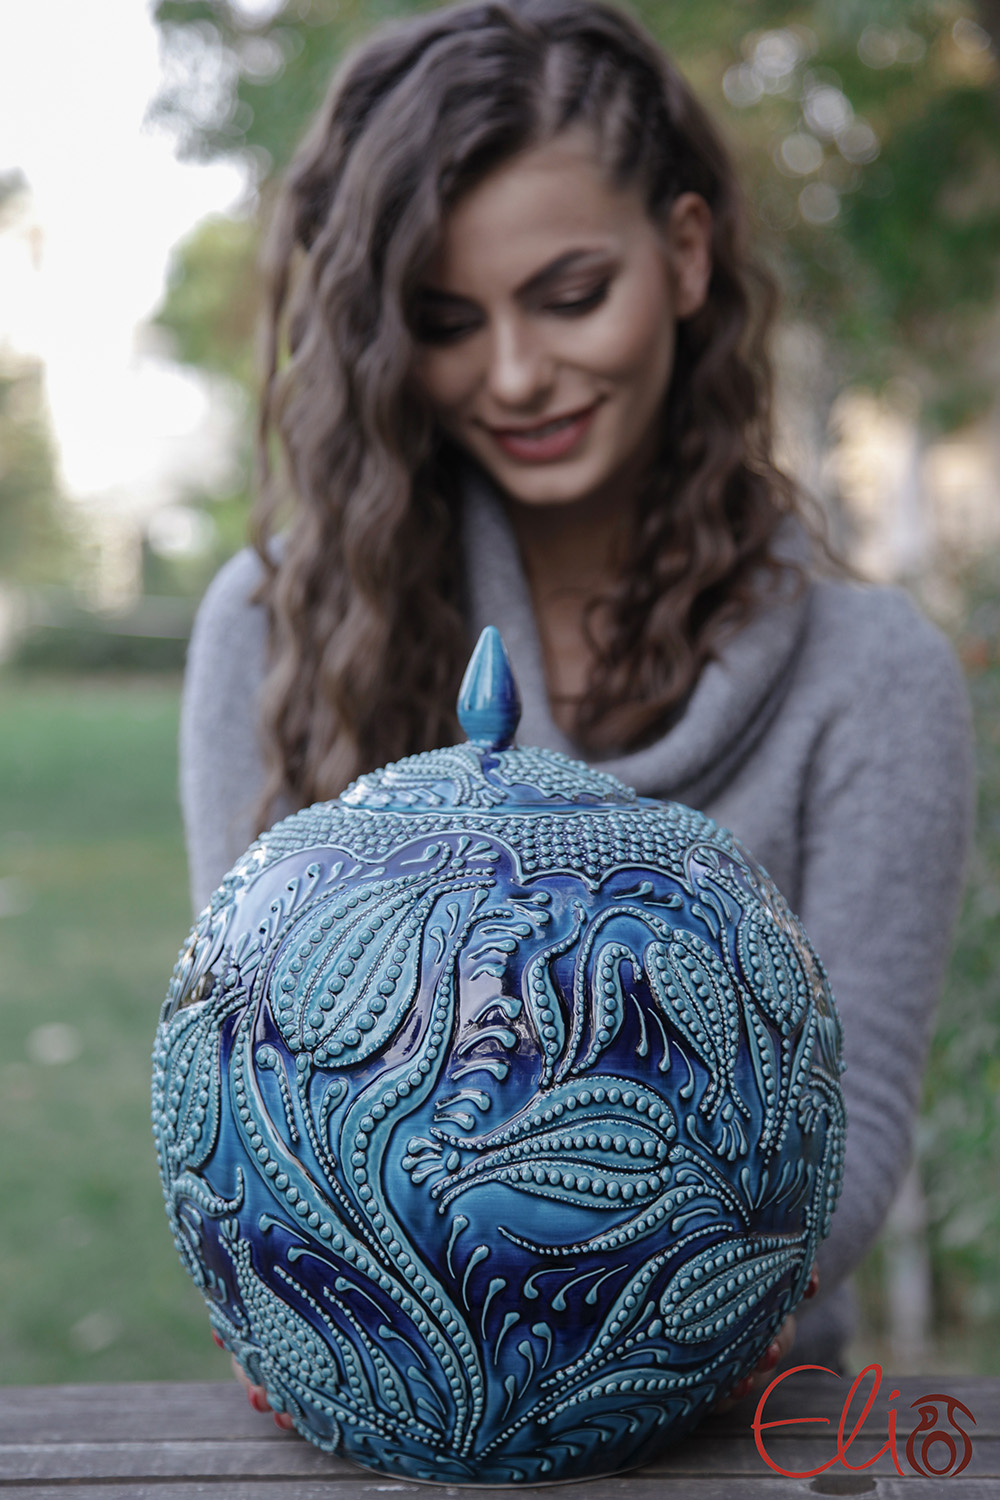 Ceramic Sphere Jar 12″